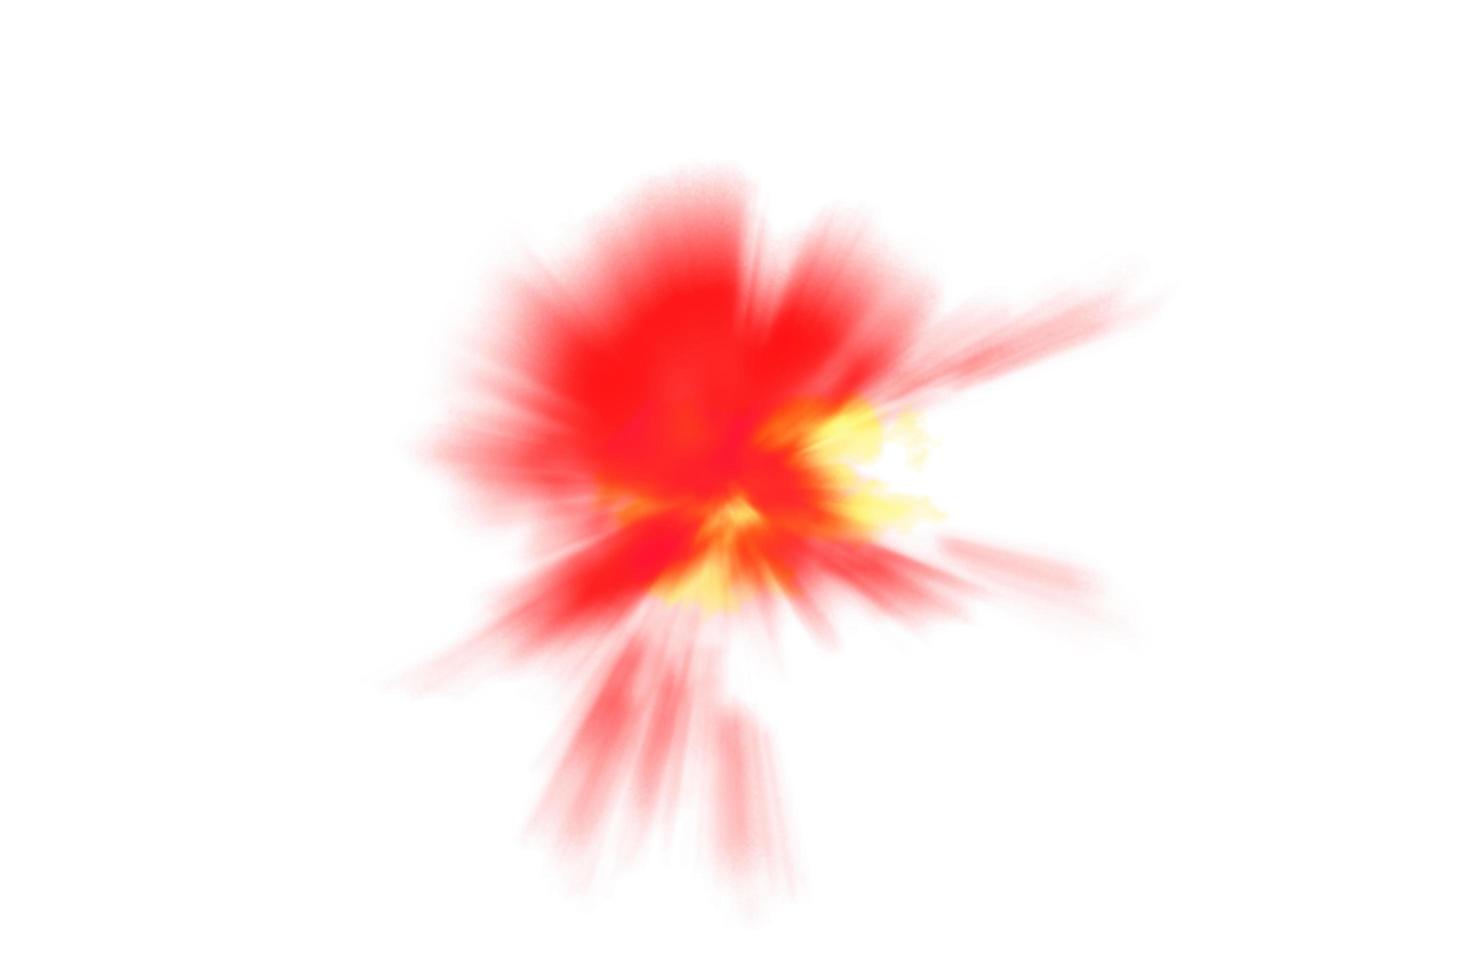 red beam light blast blurred Image,abstract background,brush effect photo